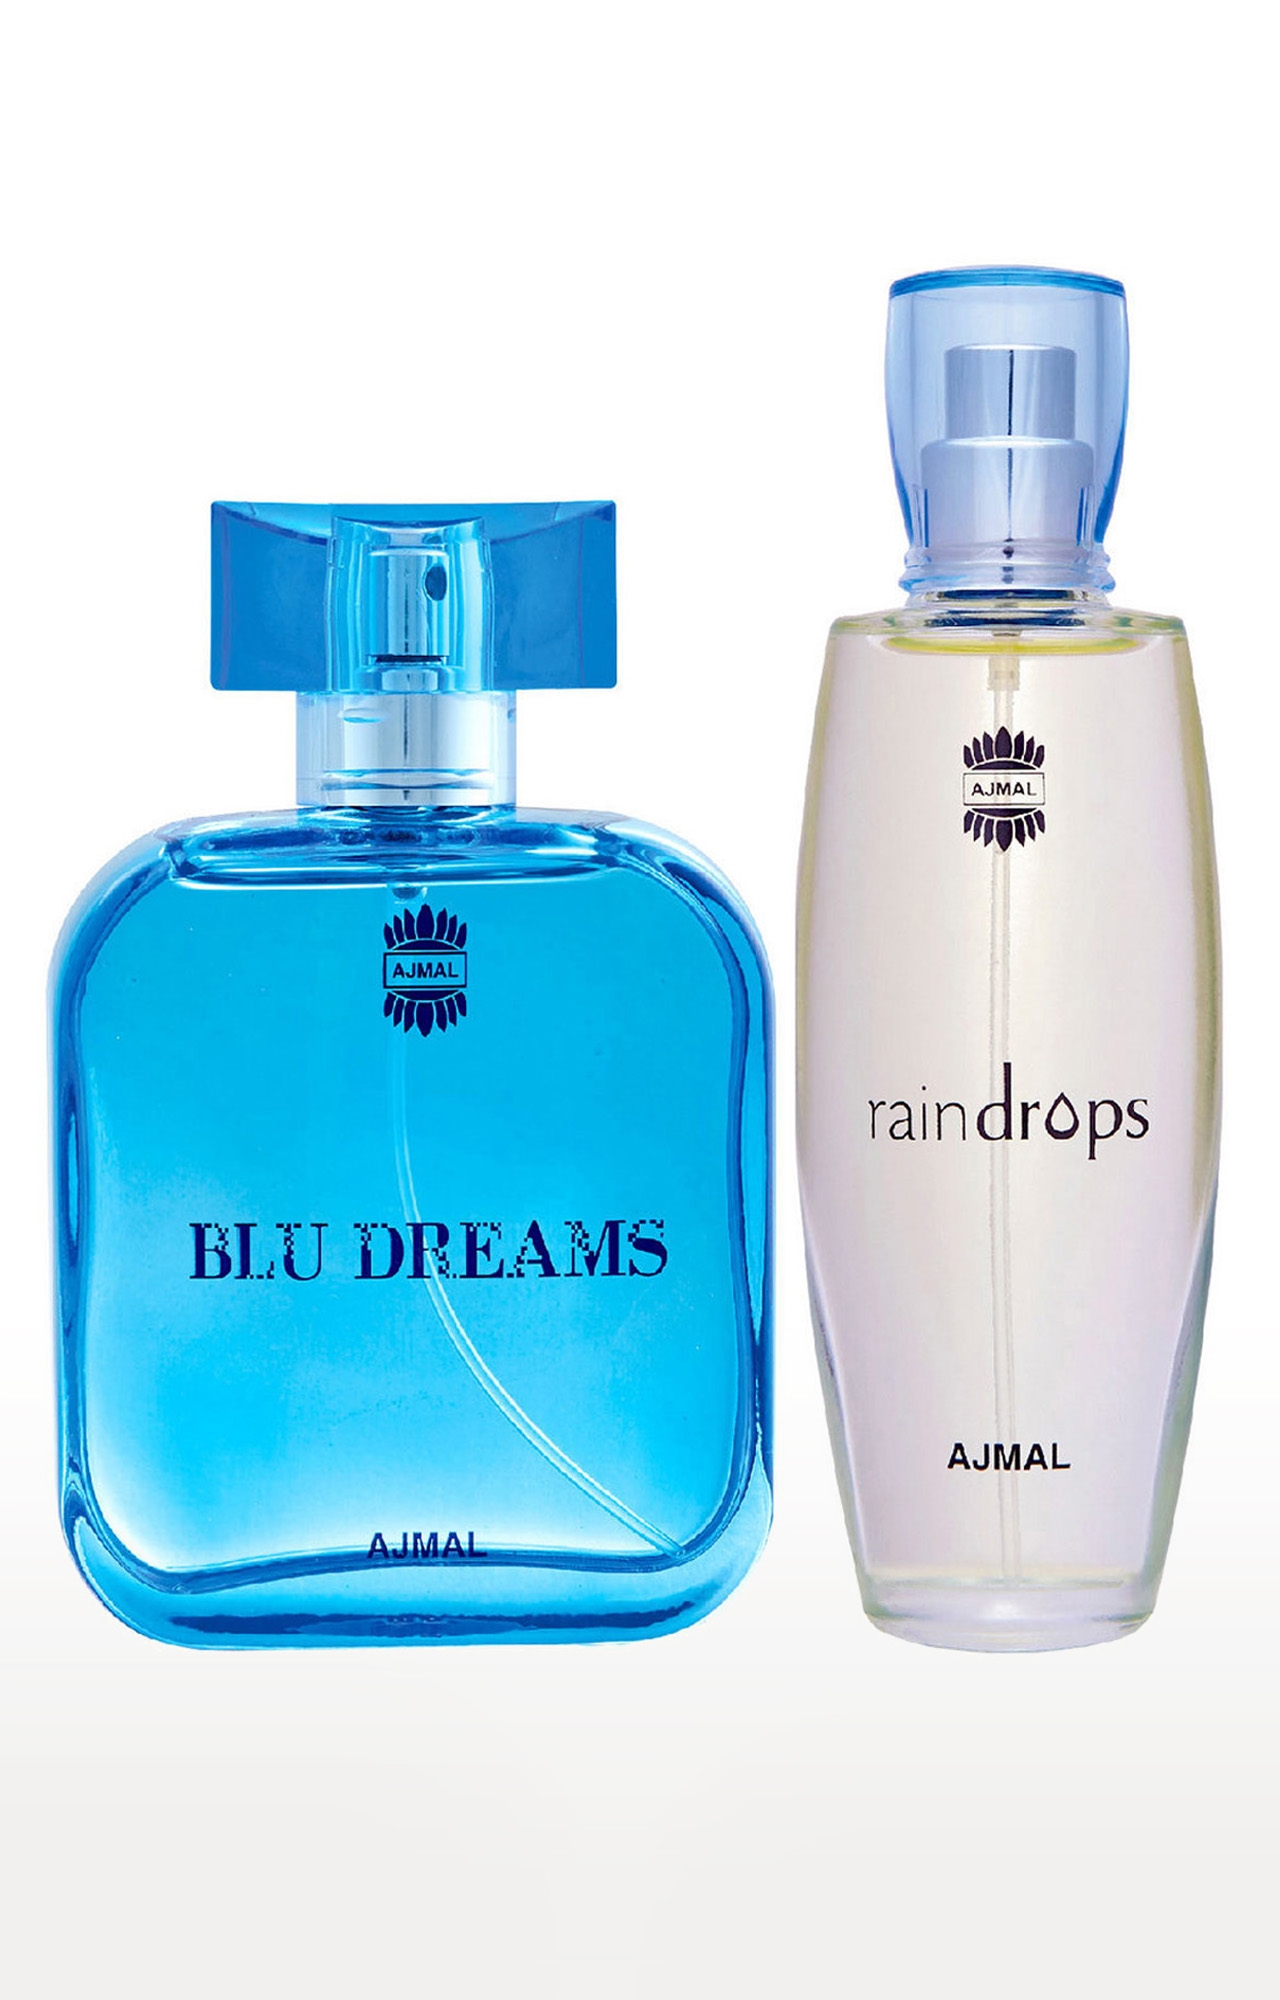 Ajmal | Ajmal Blu Dreams EDP Citurs Fruity Perfume 100ml for Men and Raindrops EDP Perfume 50ml for Women 0